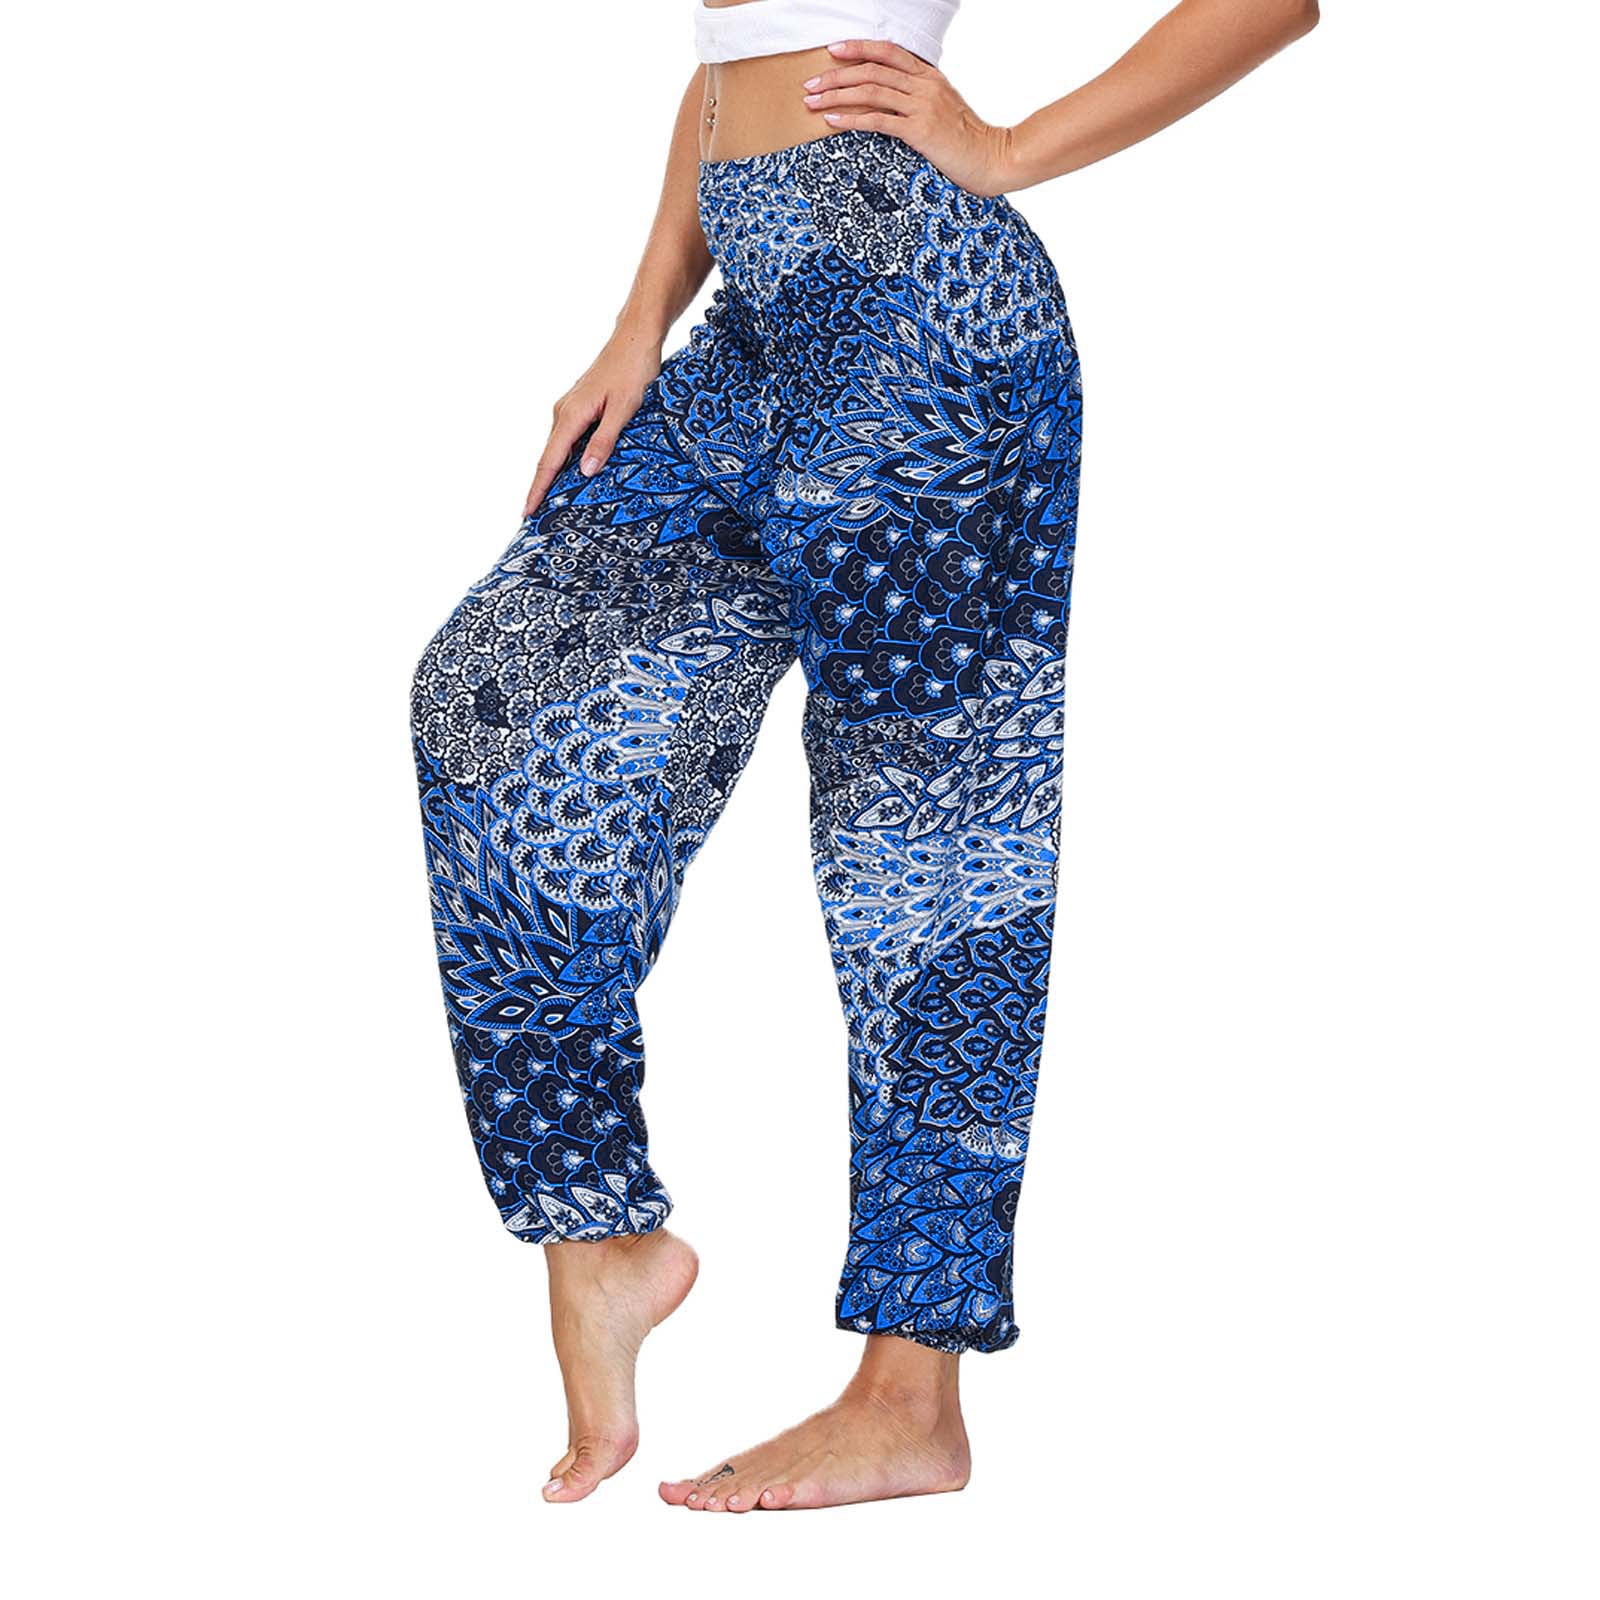 JNGSA Yoga Pants Yoga Pants With Pockets Women'S Casual Workout